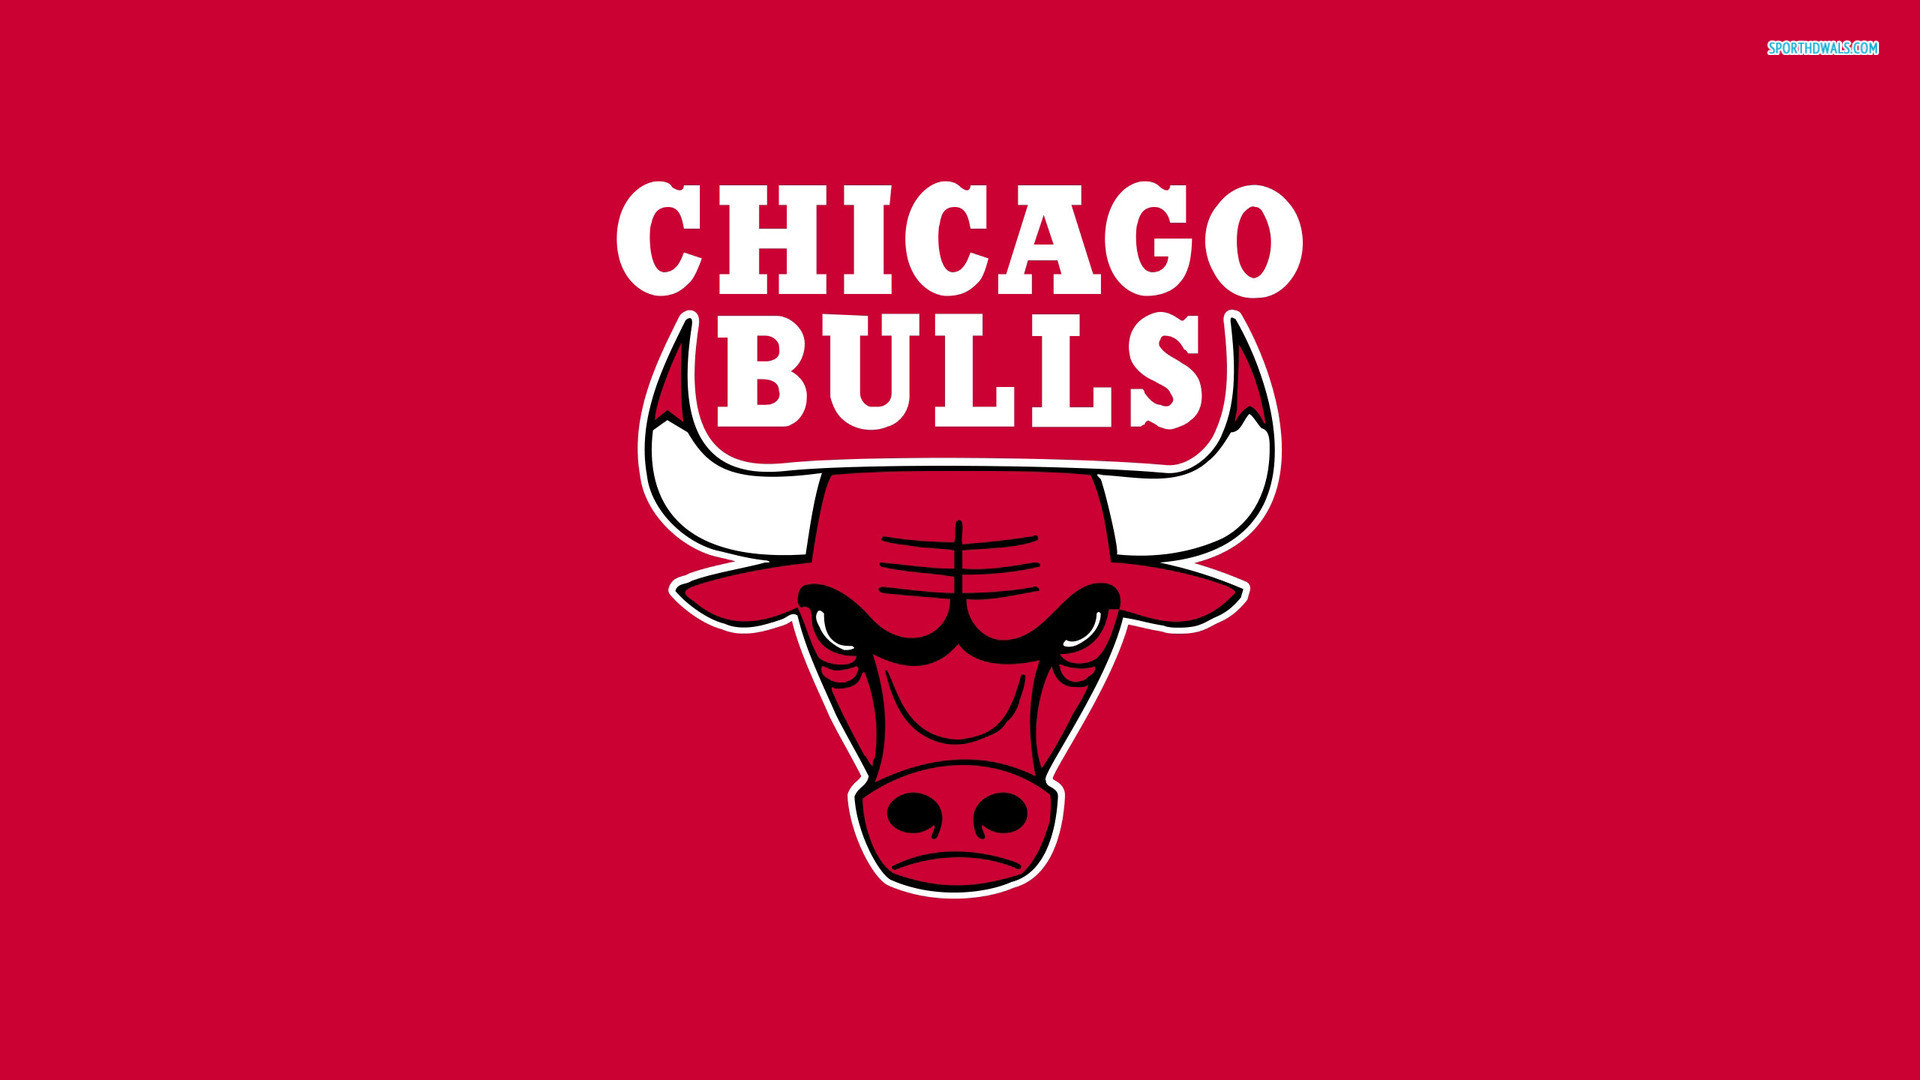 Chicago Bulls Wallpaper 2018 52 pictures